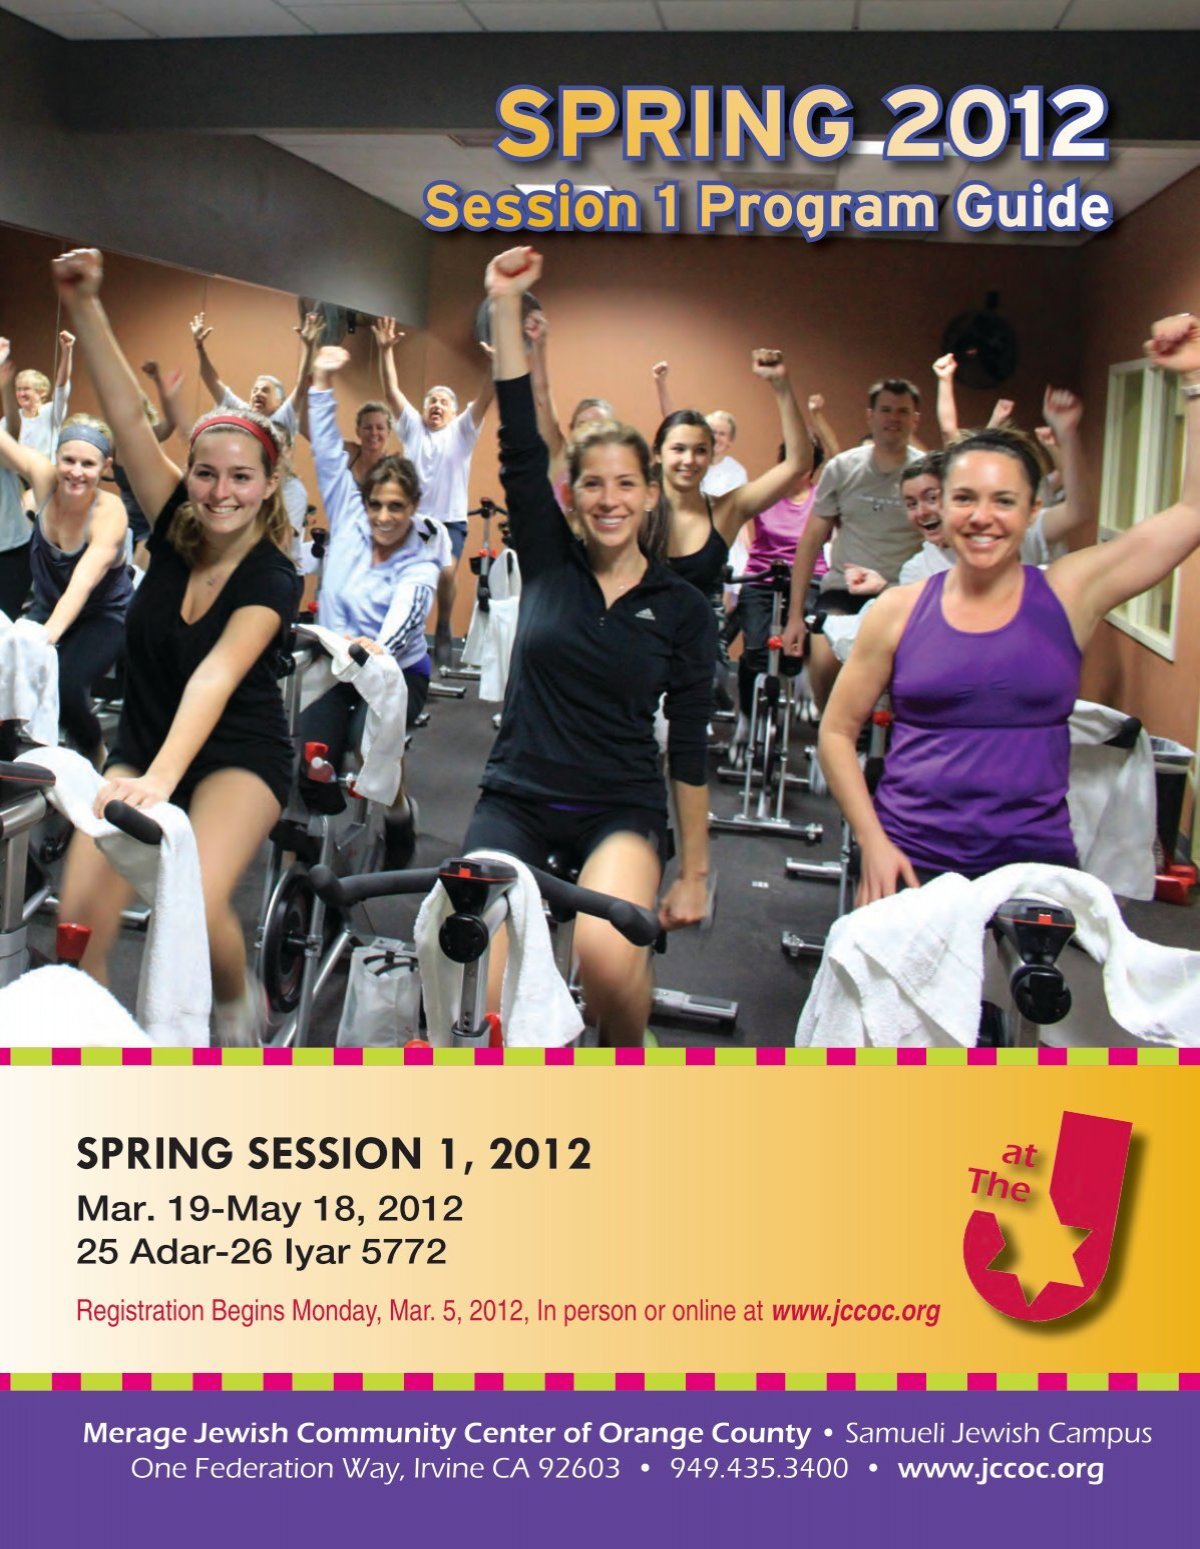 SPRING 2012 - Merage Jewish Community Center